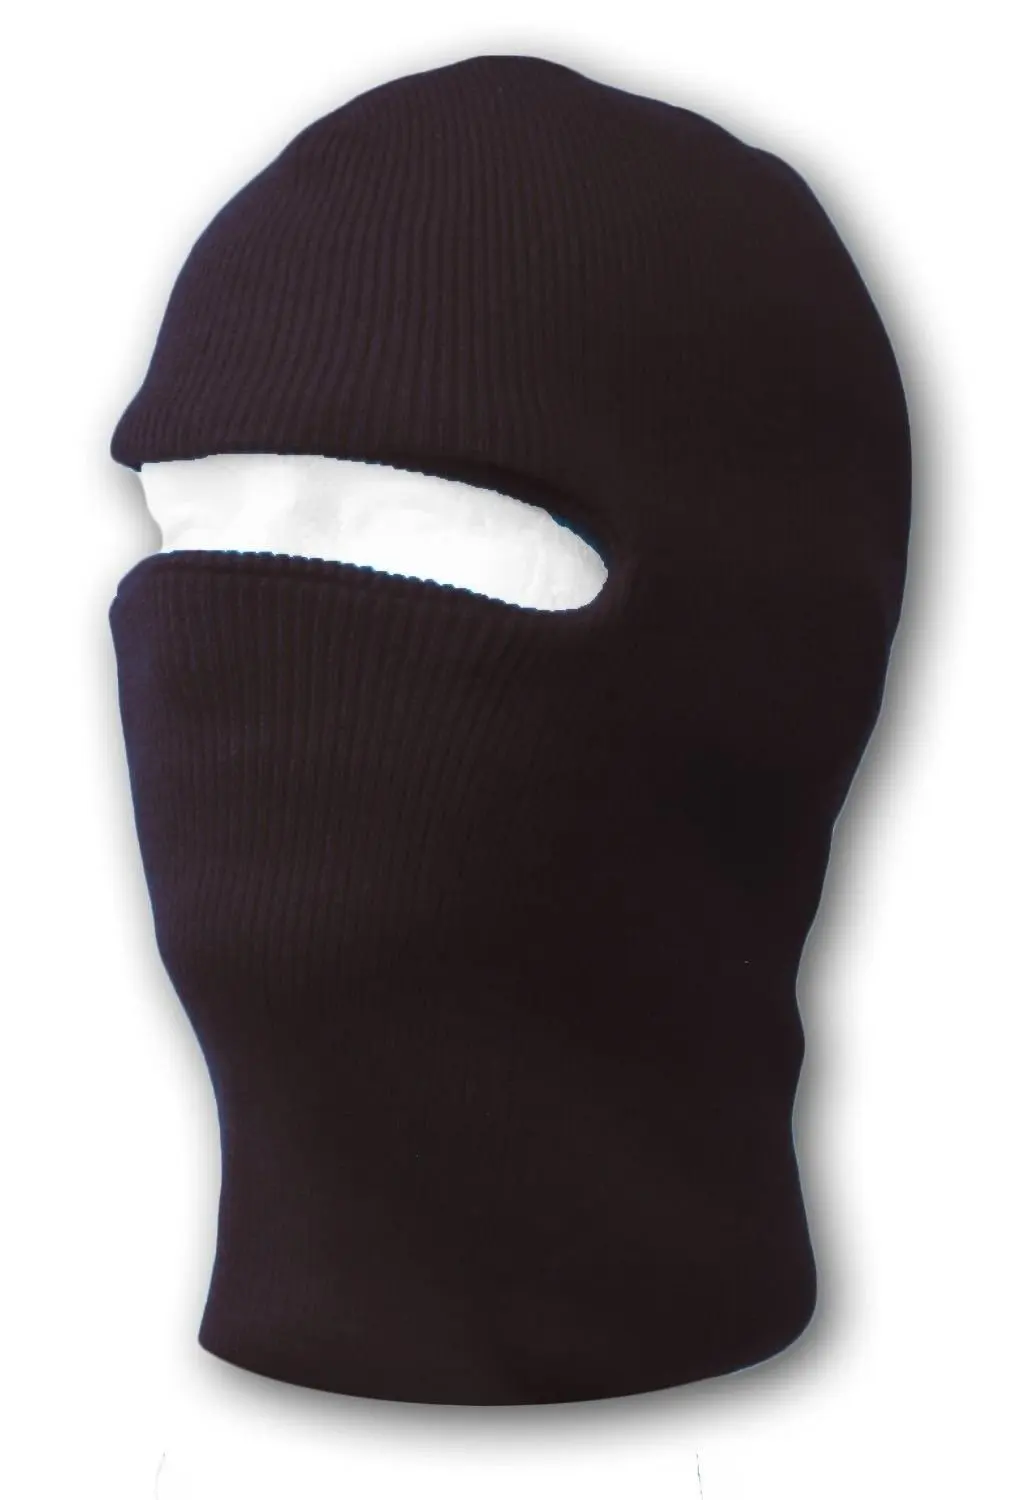 Cheap Hole Ski Mask, find Hole Ski Mask deals on line at Alibaba.com